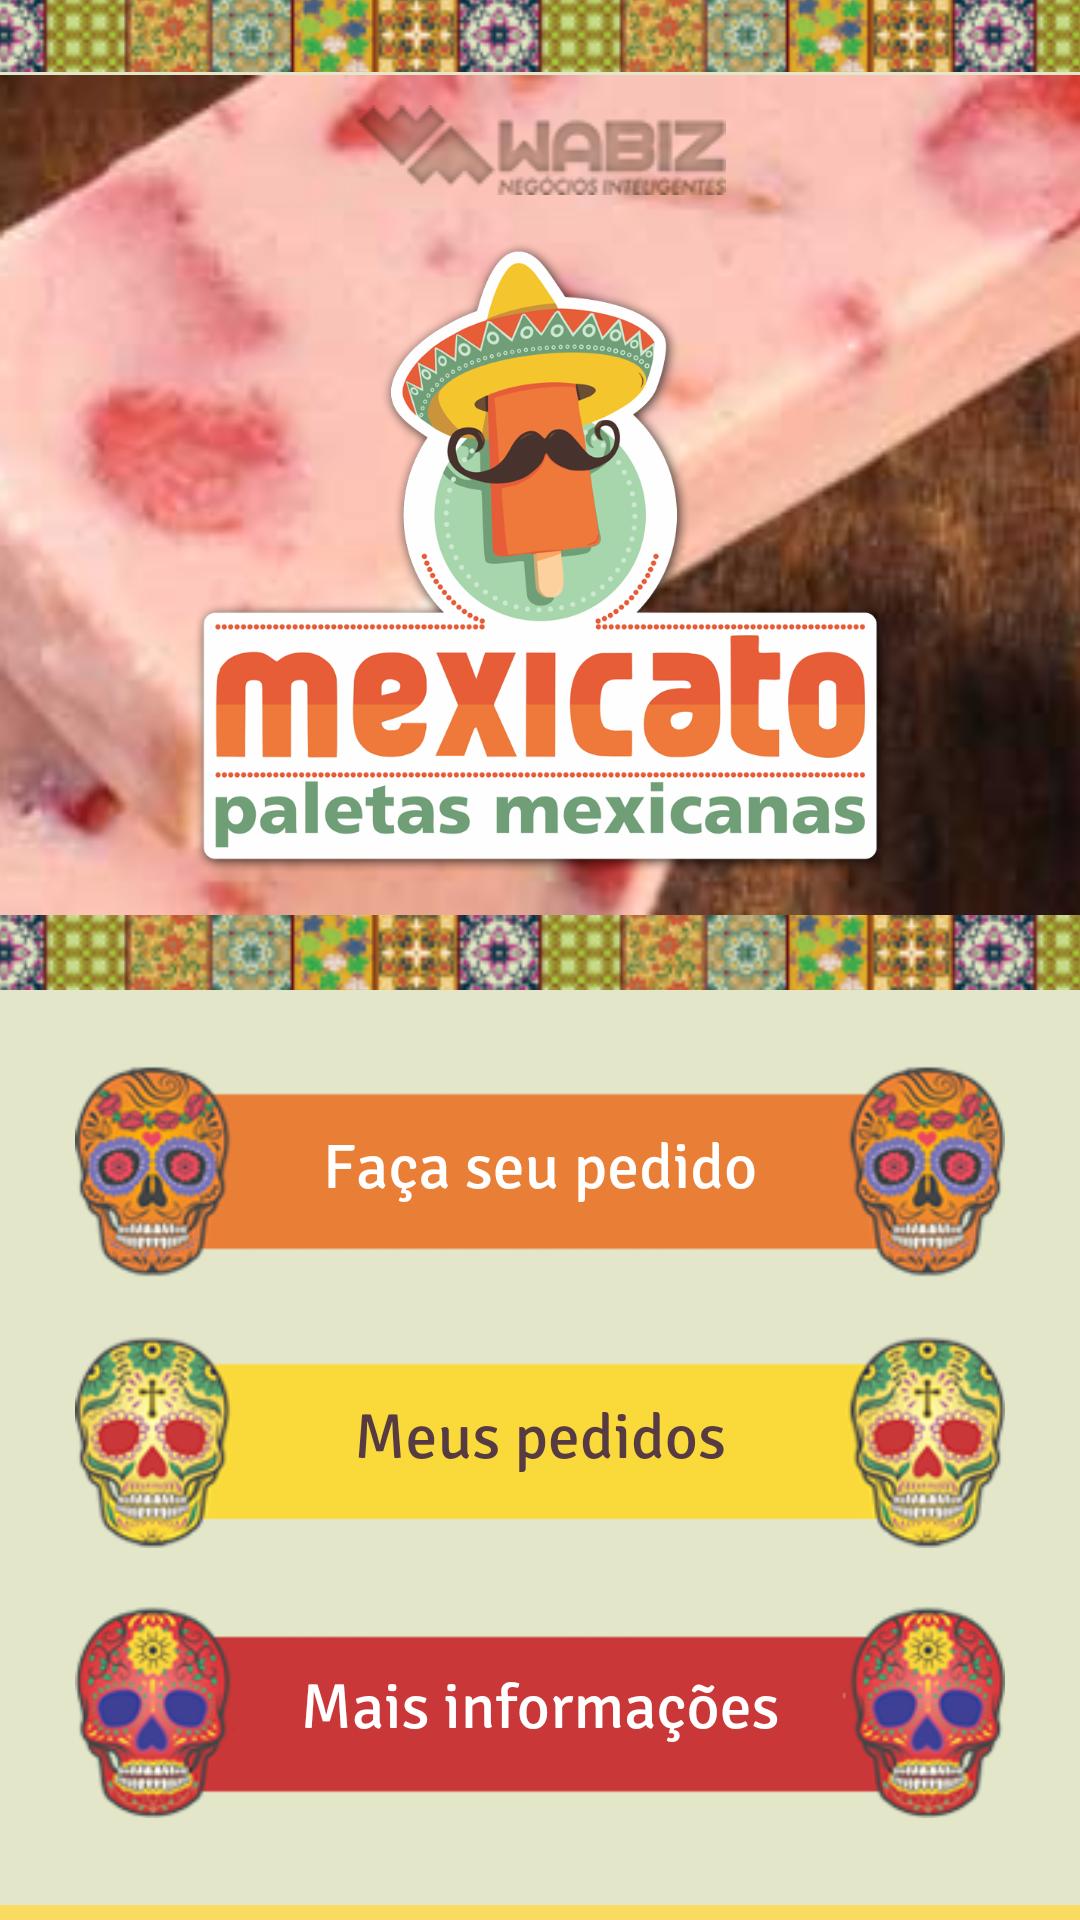 Mexicato Paletas Mexicanas For Android Apk Download - luxo ball roblox